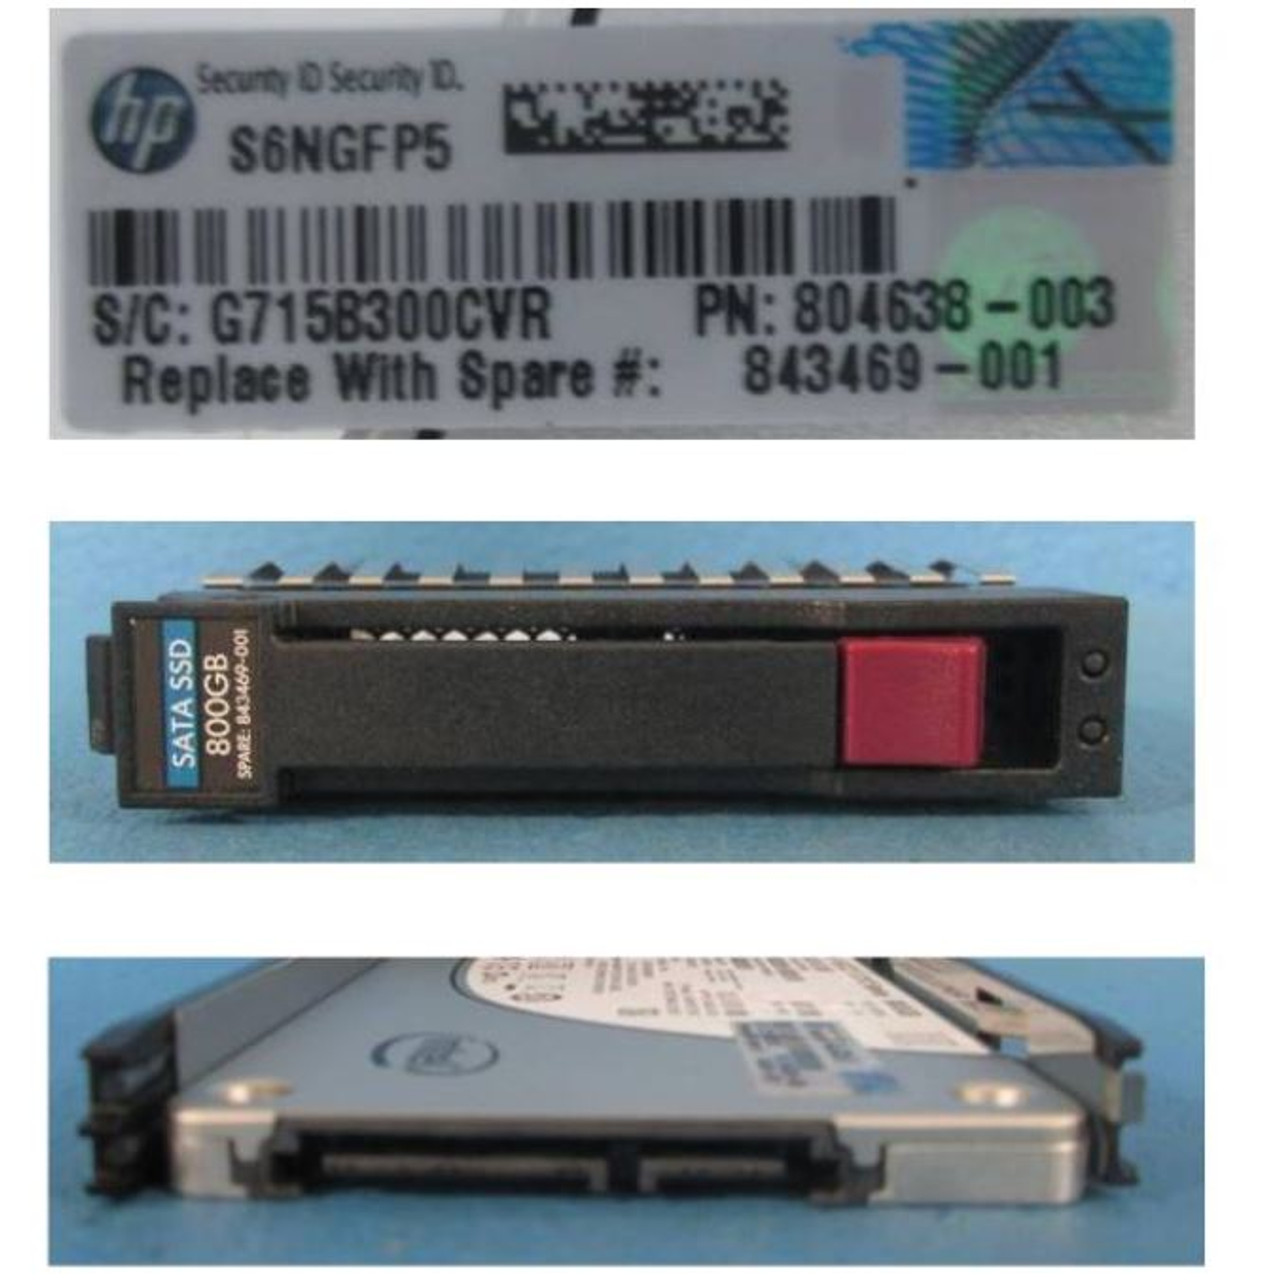 SPS-DRV SSD 800GB 6G SATA 2.5 MLC - 843469-001